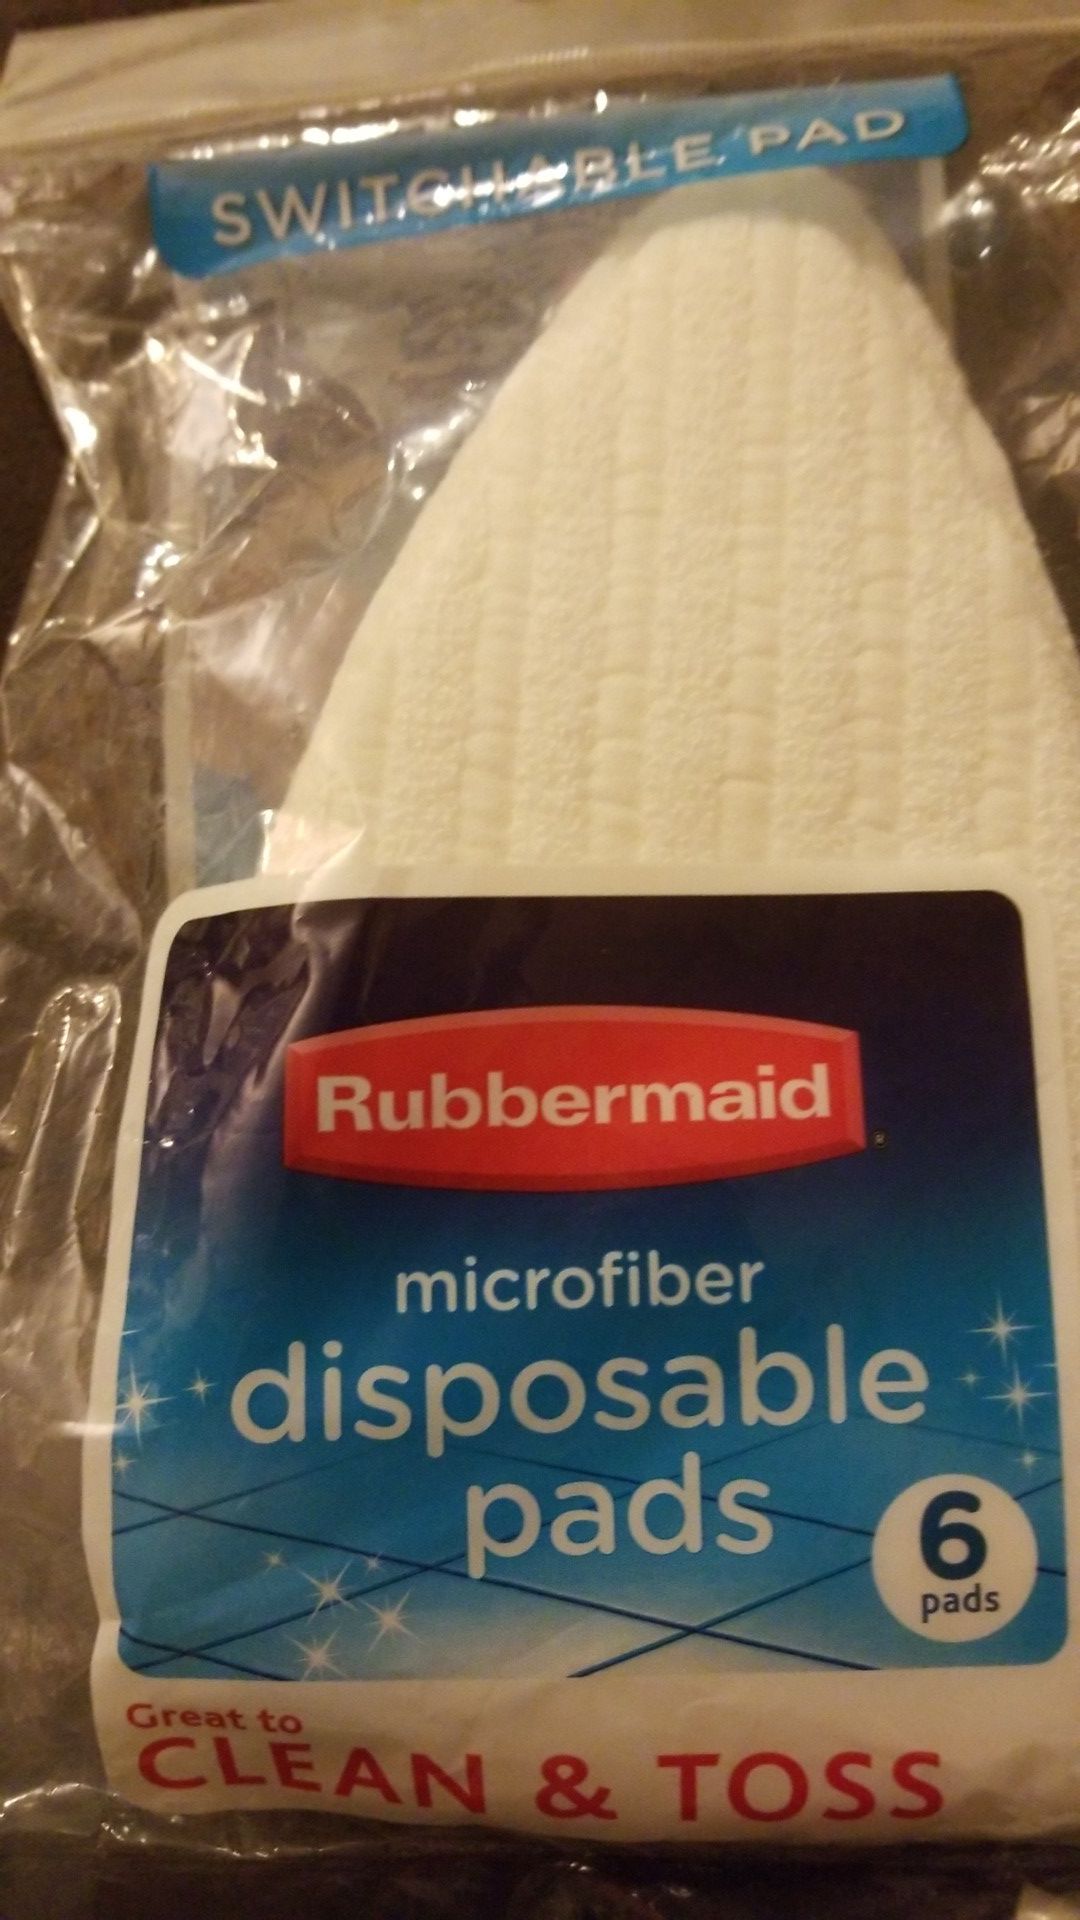 Rubbermaid microfiber disposable pads